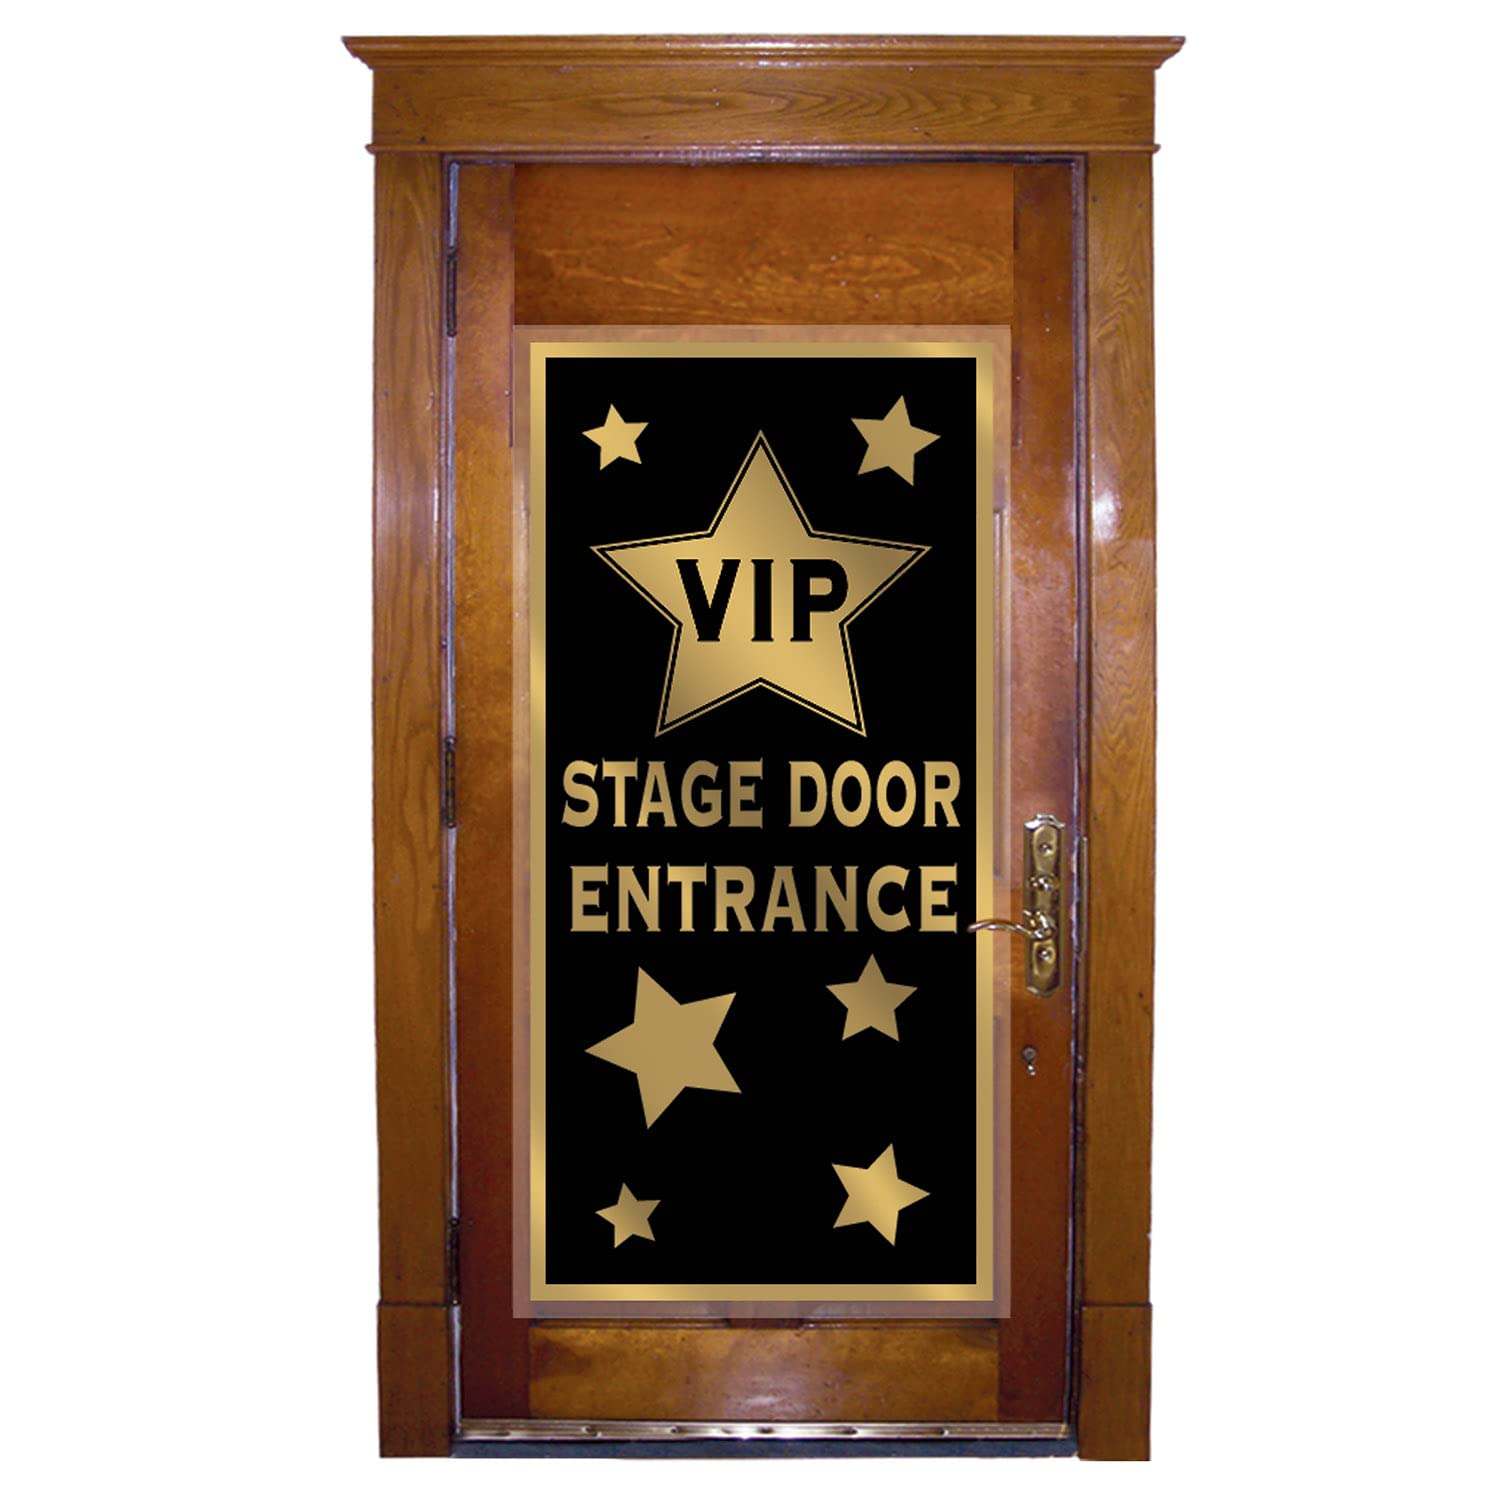 VIP Stage Door Entrance Door Cover Party Accessory (1 count) (1/Pkg)